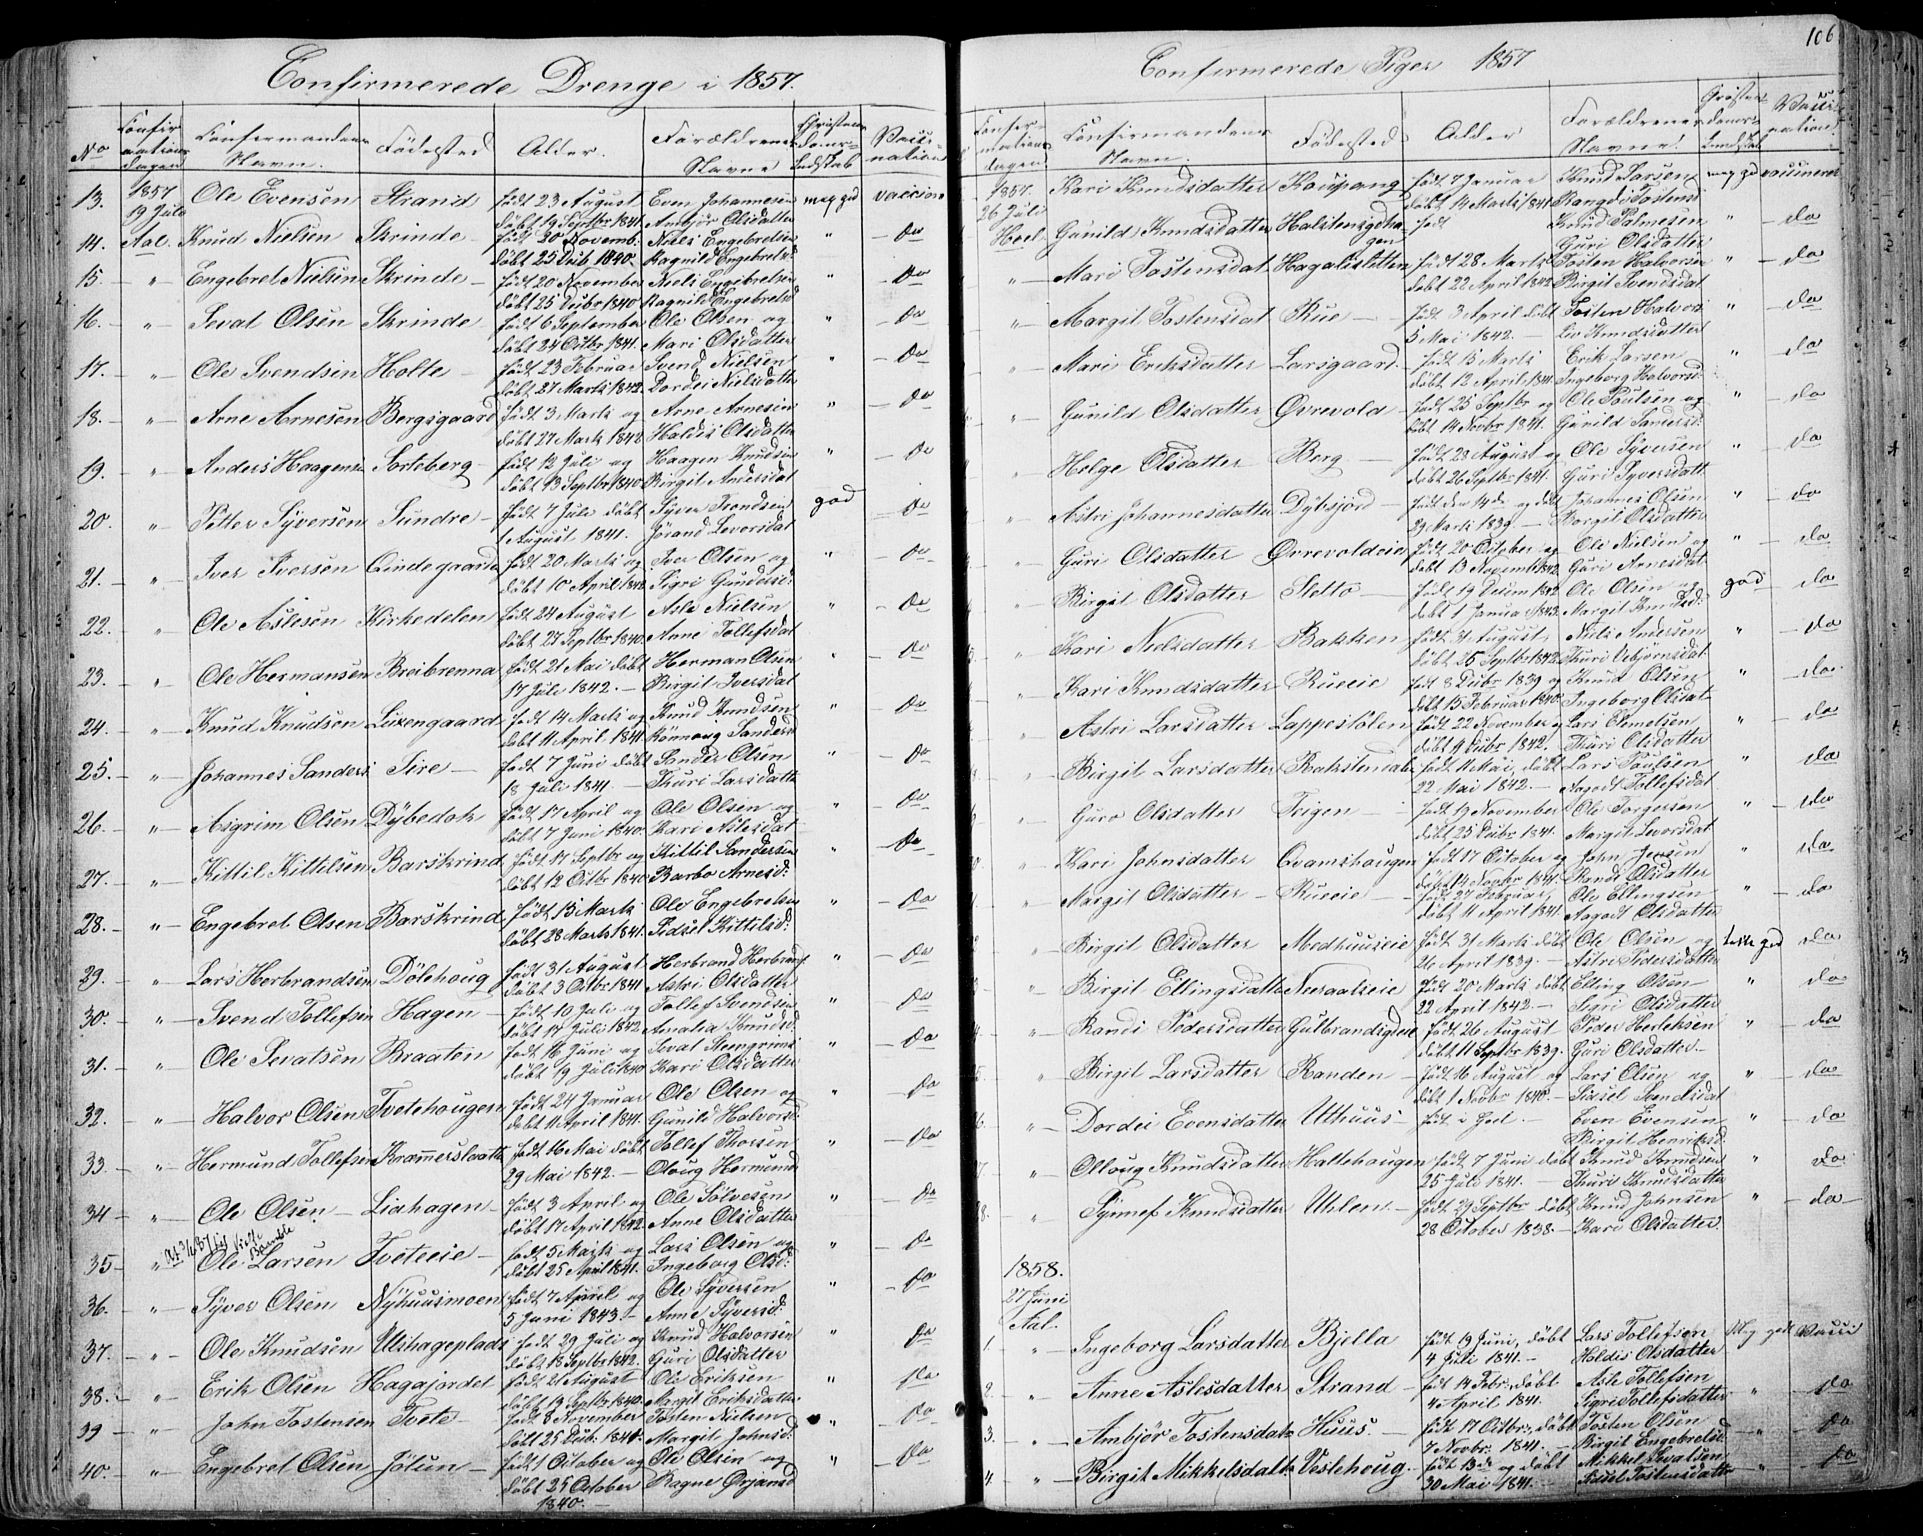 Parish Registry Sako Al Kirkeboker F Fa L0006 Parish Register Official No I 6 1849 1864 P 106 Scanned Archives The National Archives Of Norway